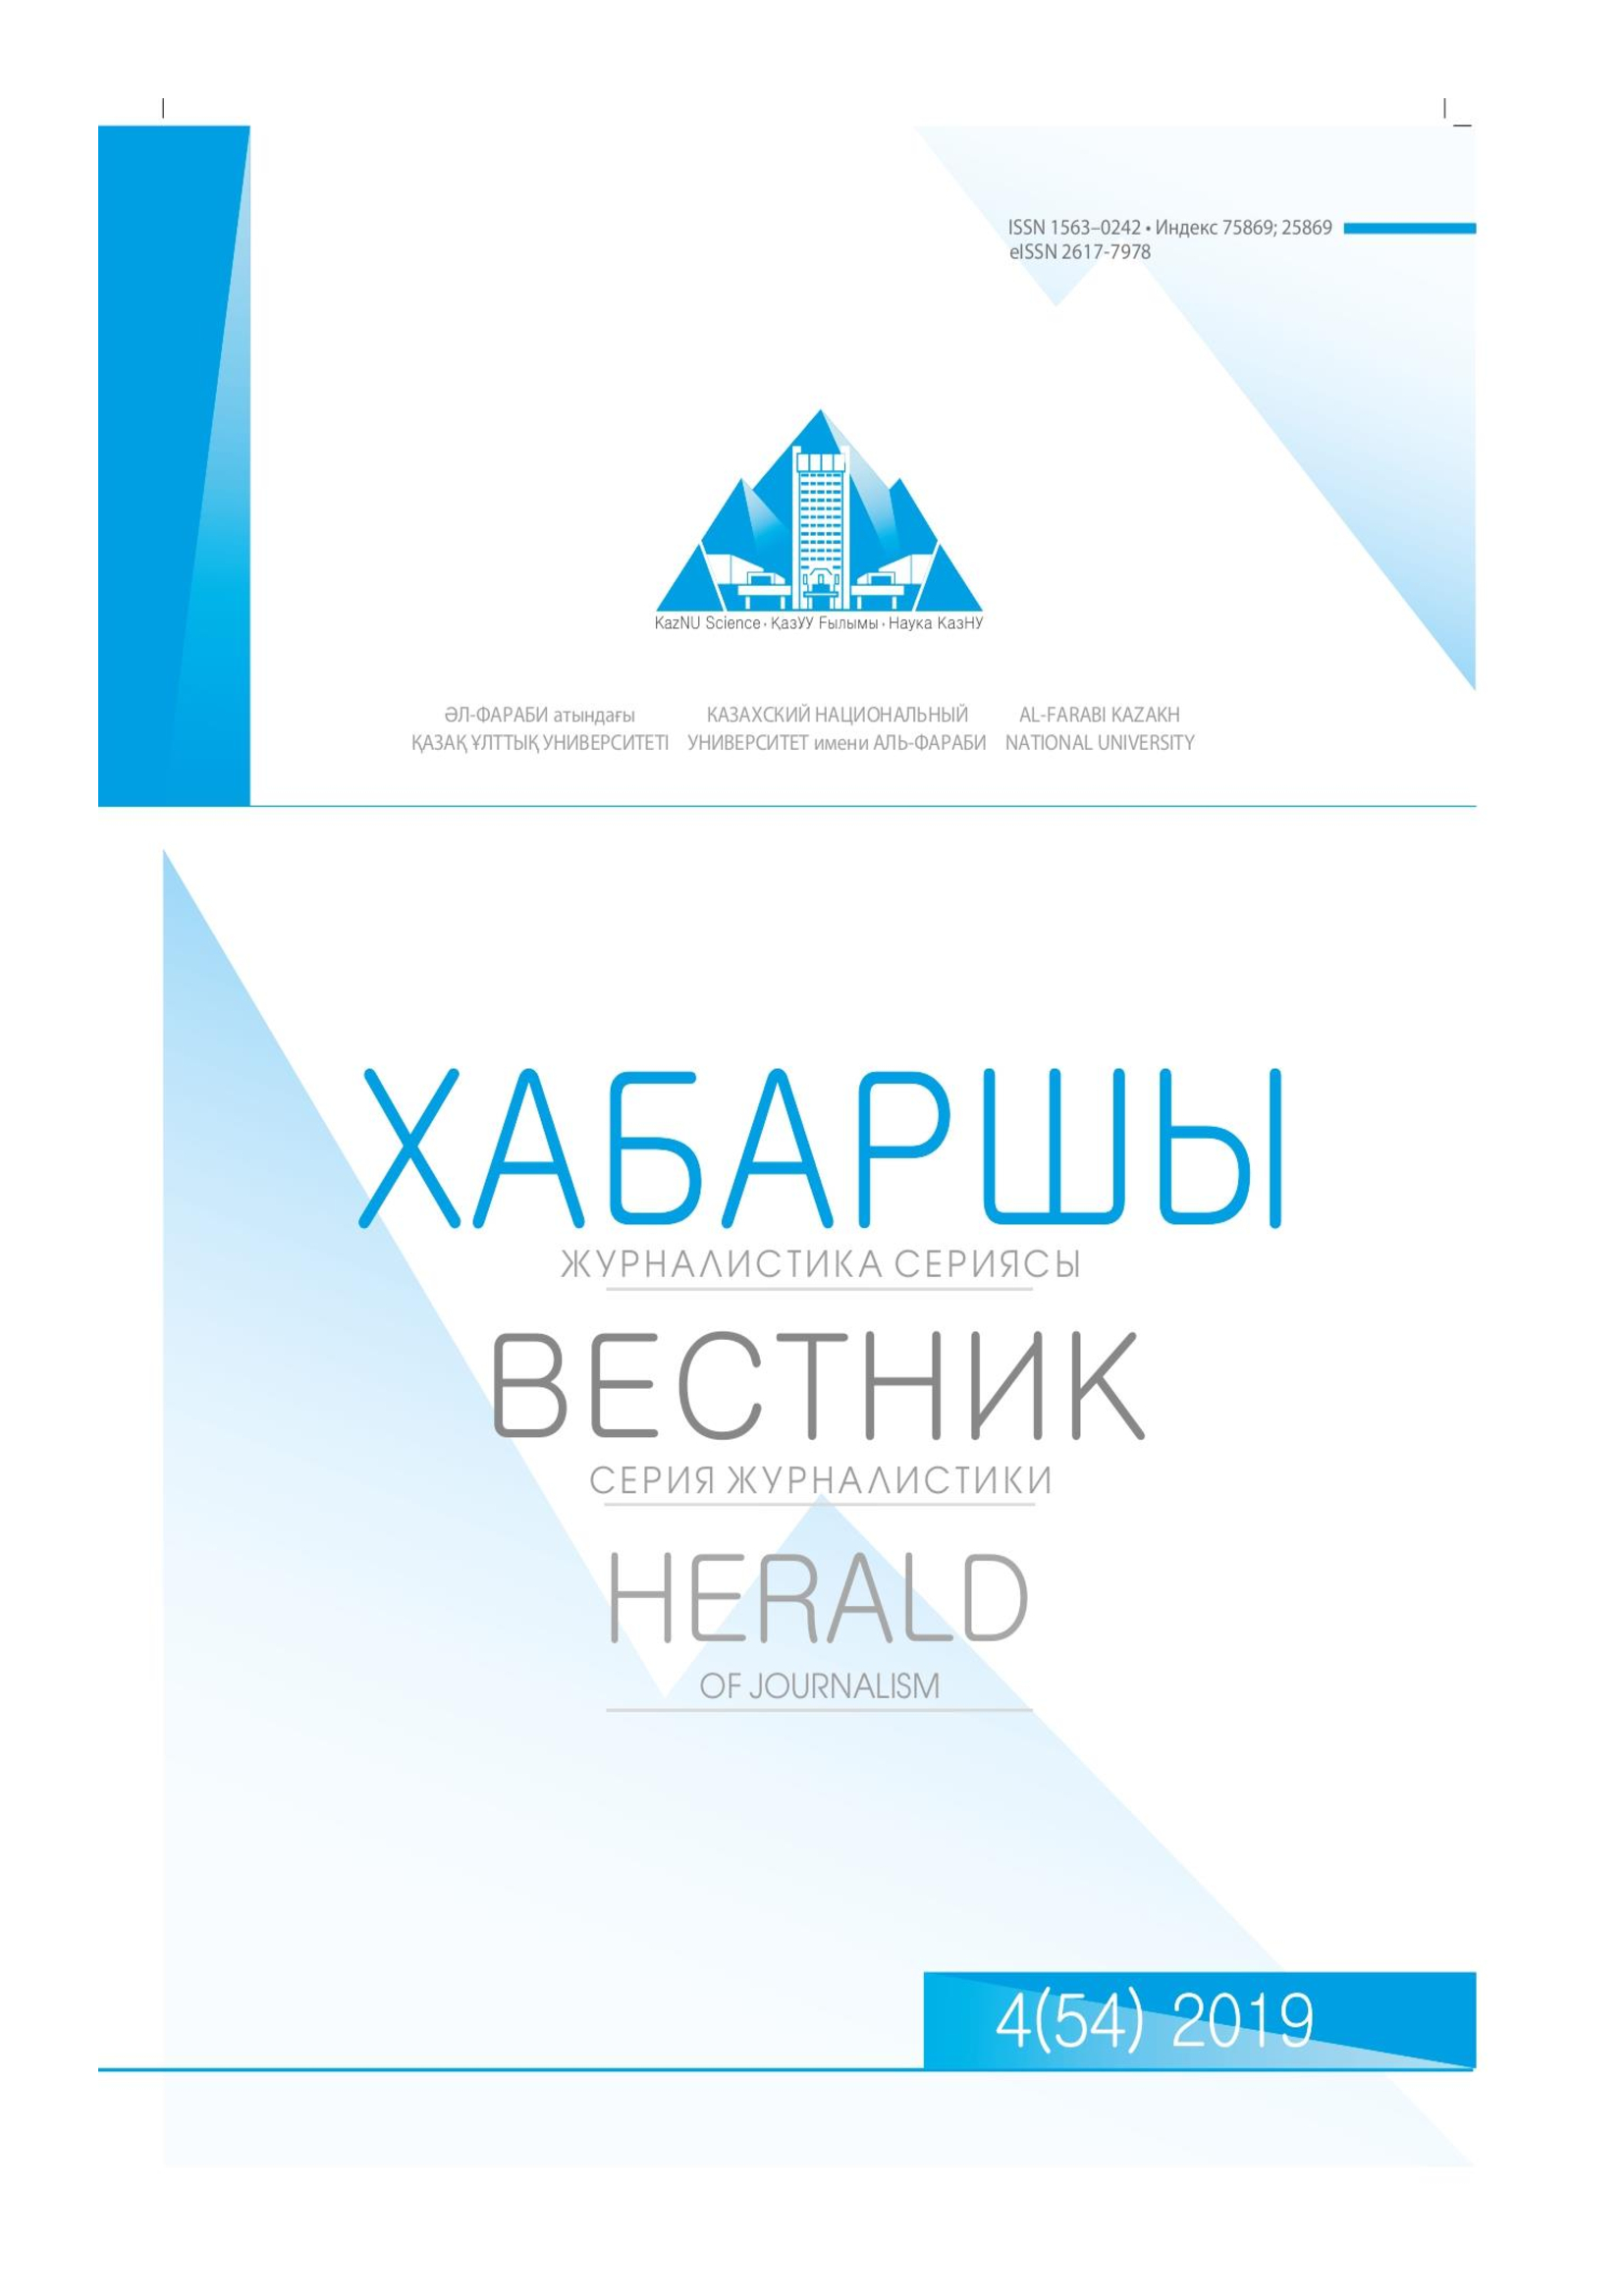 					View Vol. 54 No. 4 (2019): Al-Farabi kazakh national university. Herald of journalism
				